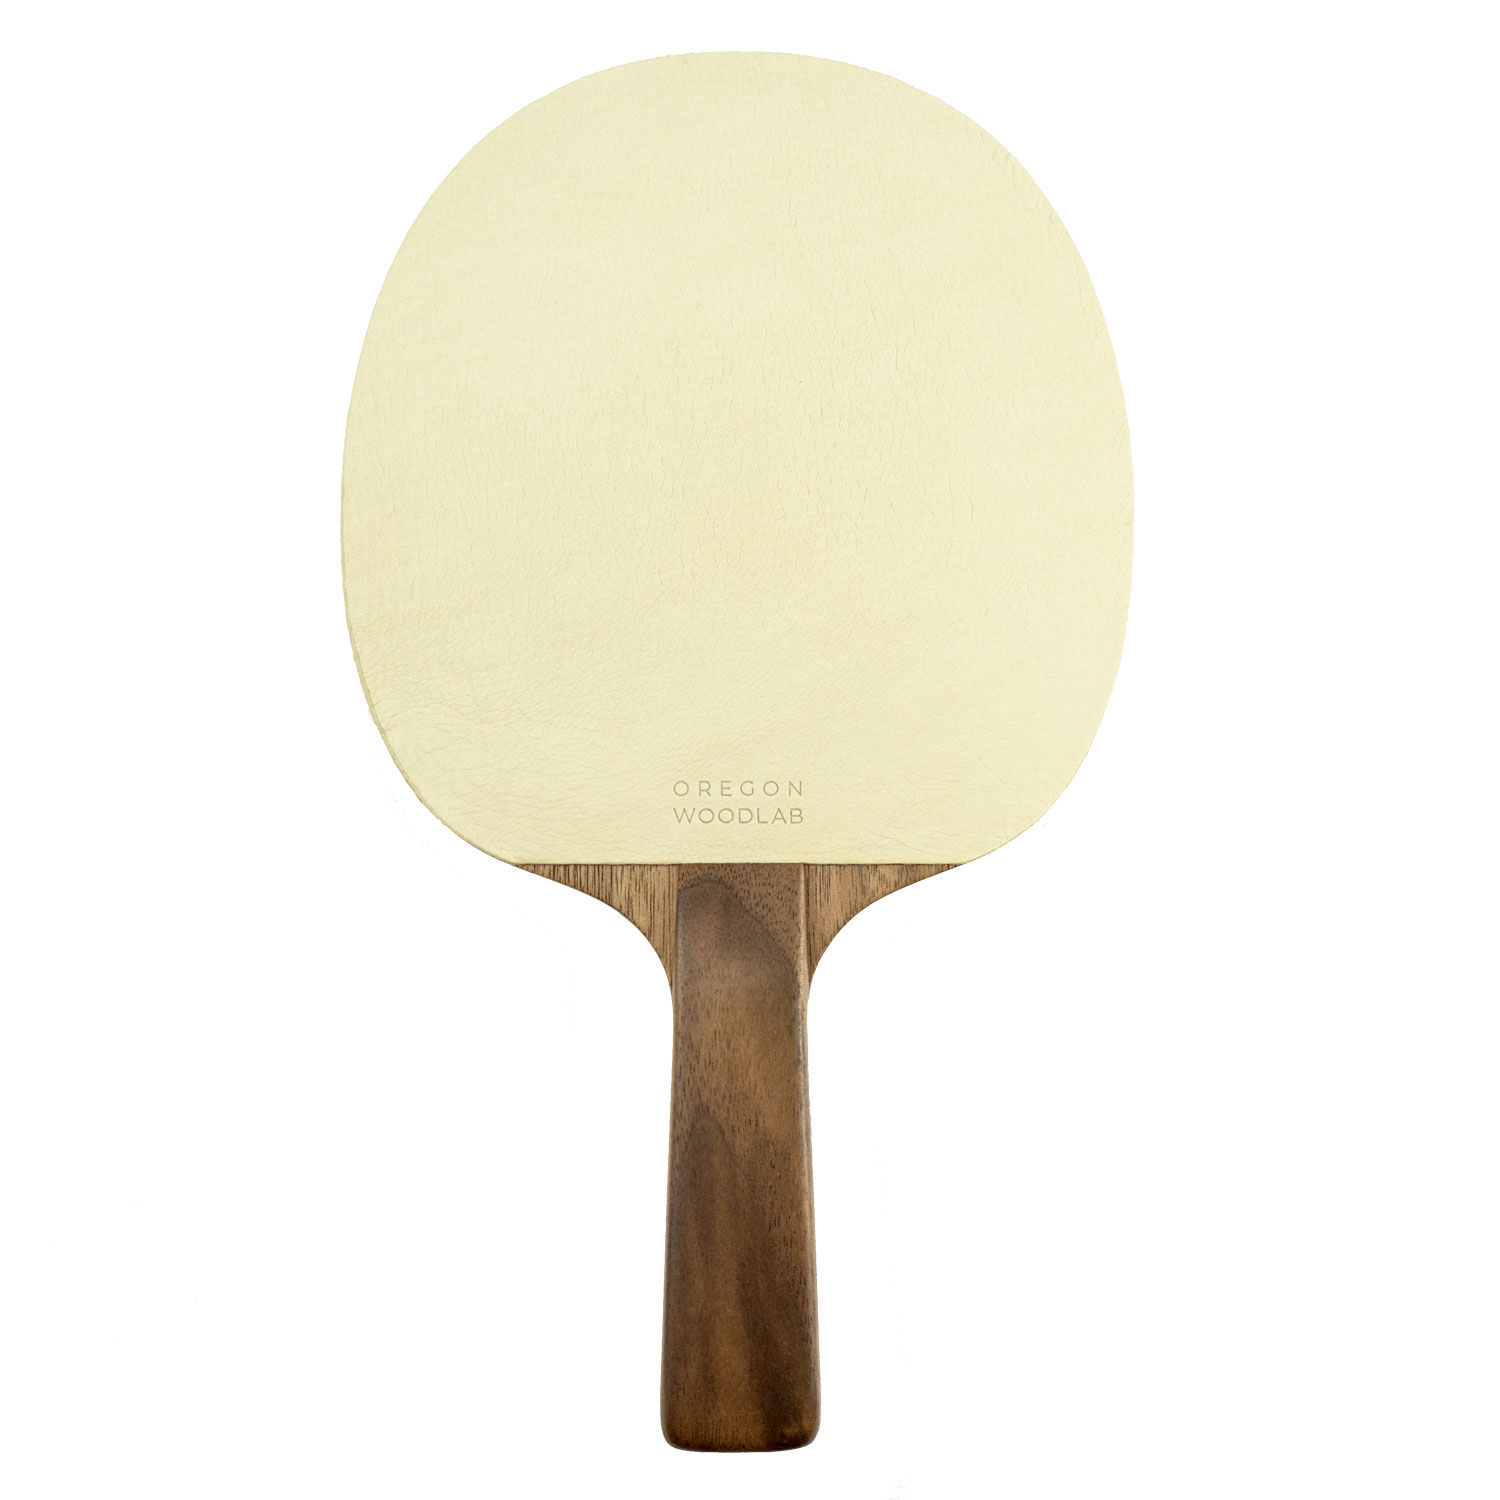 Oregon Wood Lab - Walnut Leather Table Tennis Rackets